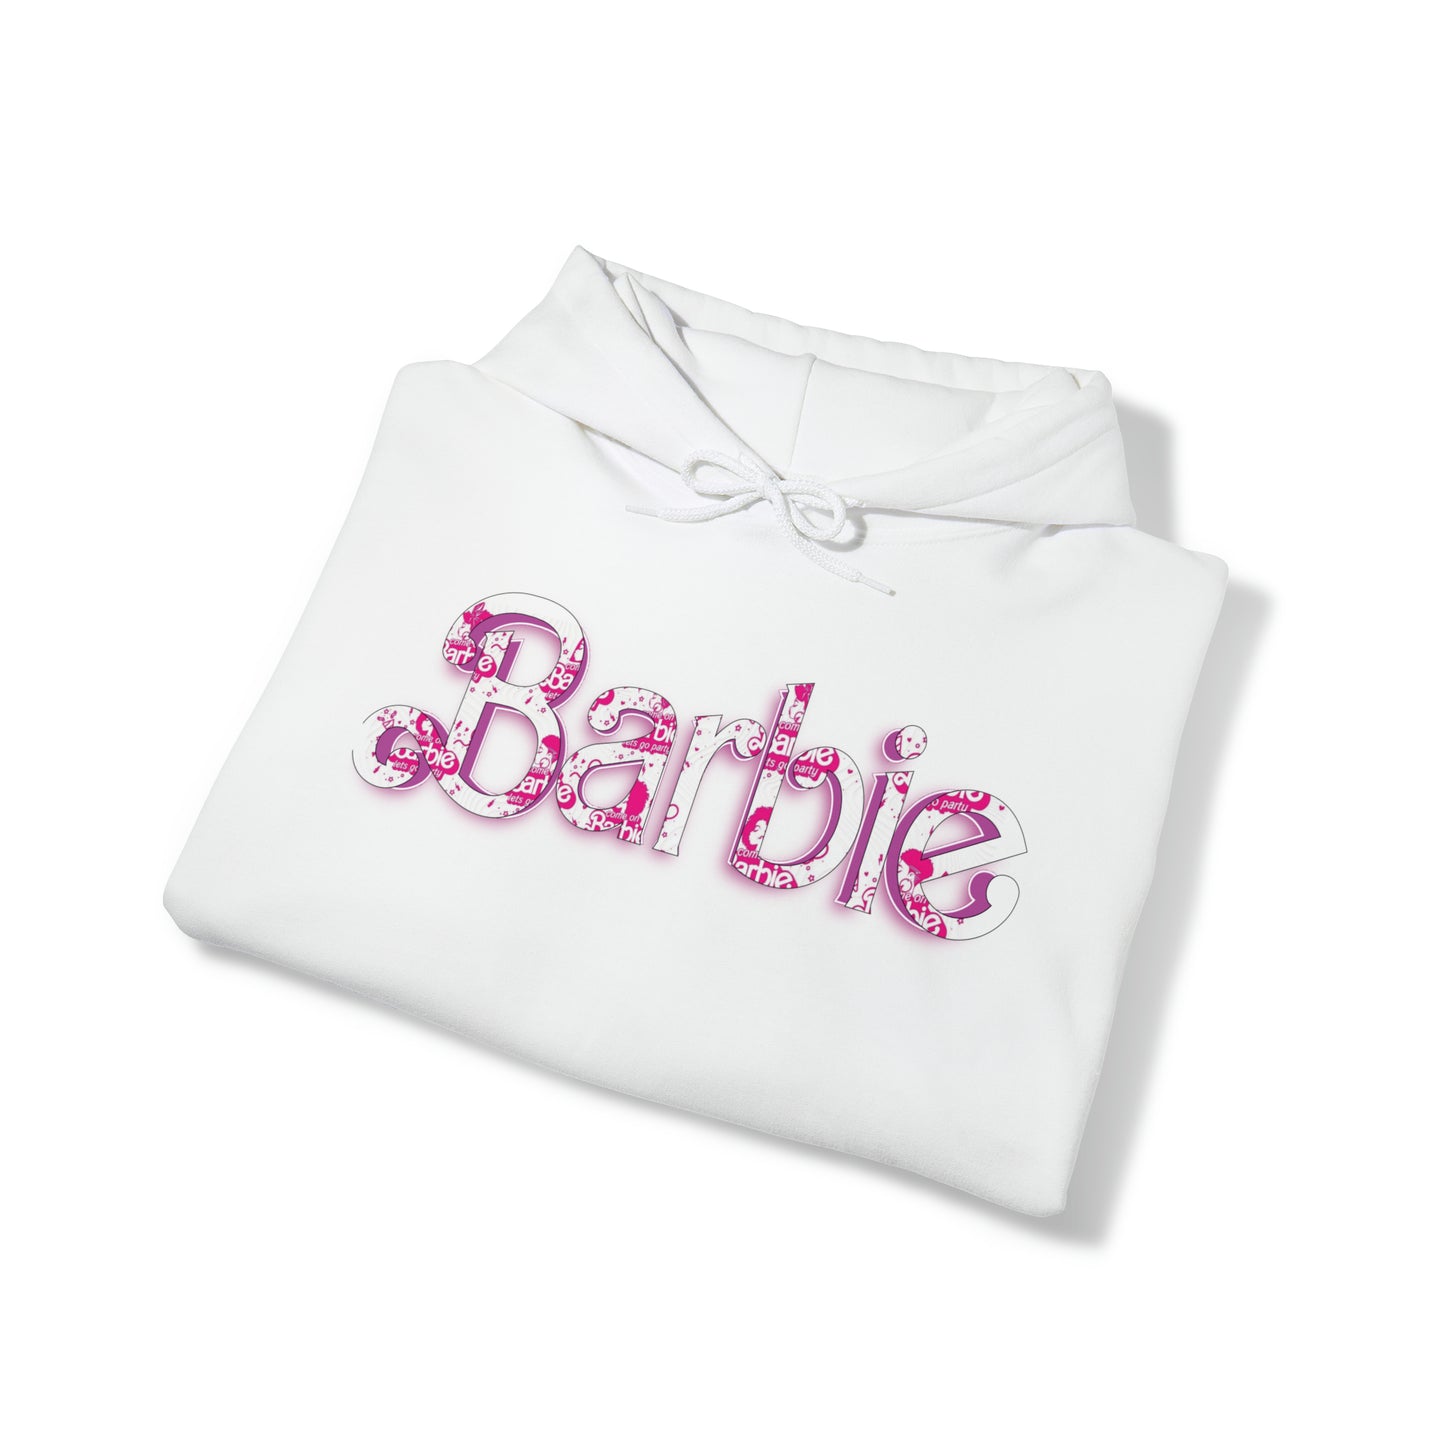 Barbie[white] Unisex Heavy Blend™ Hooded Sweatshirt